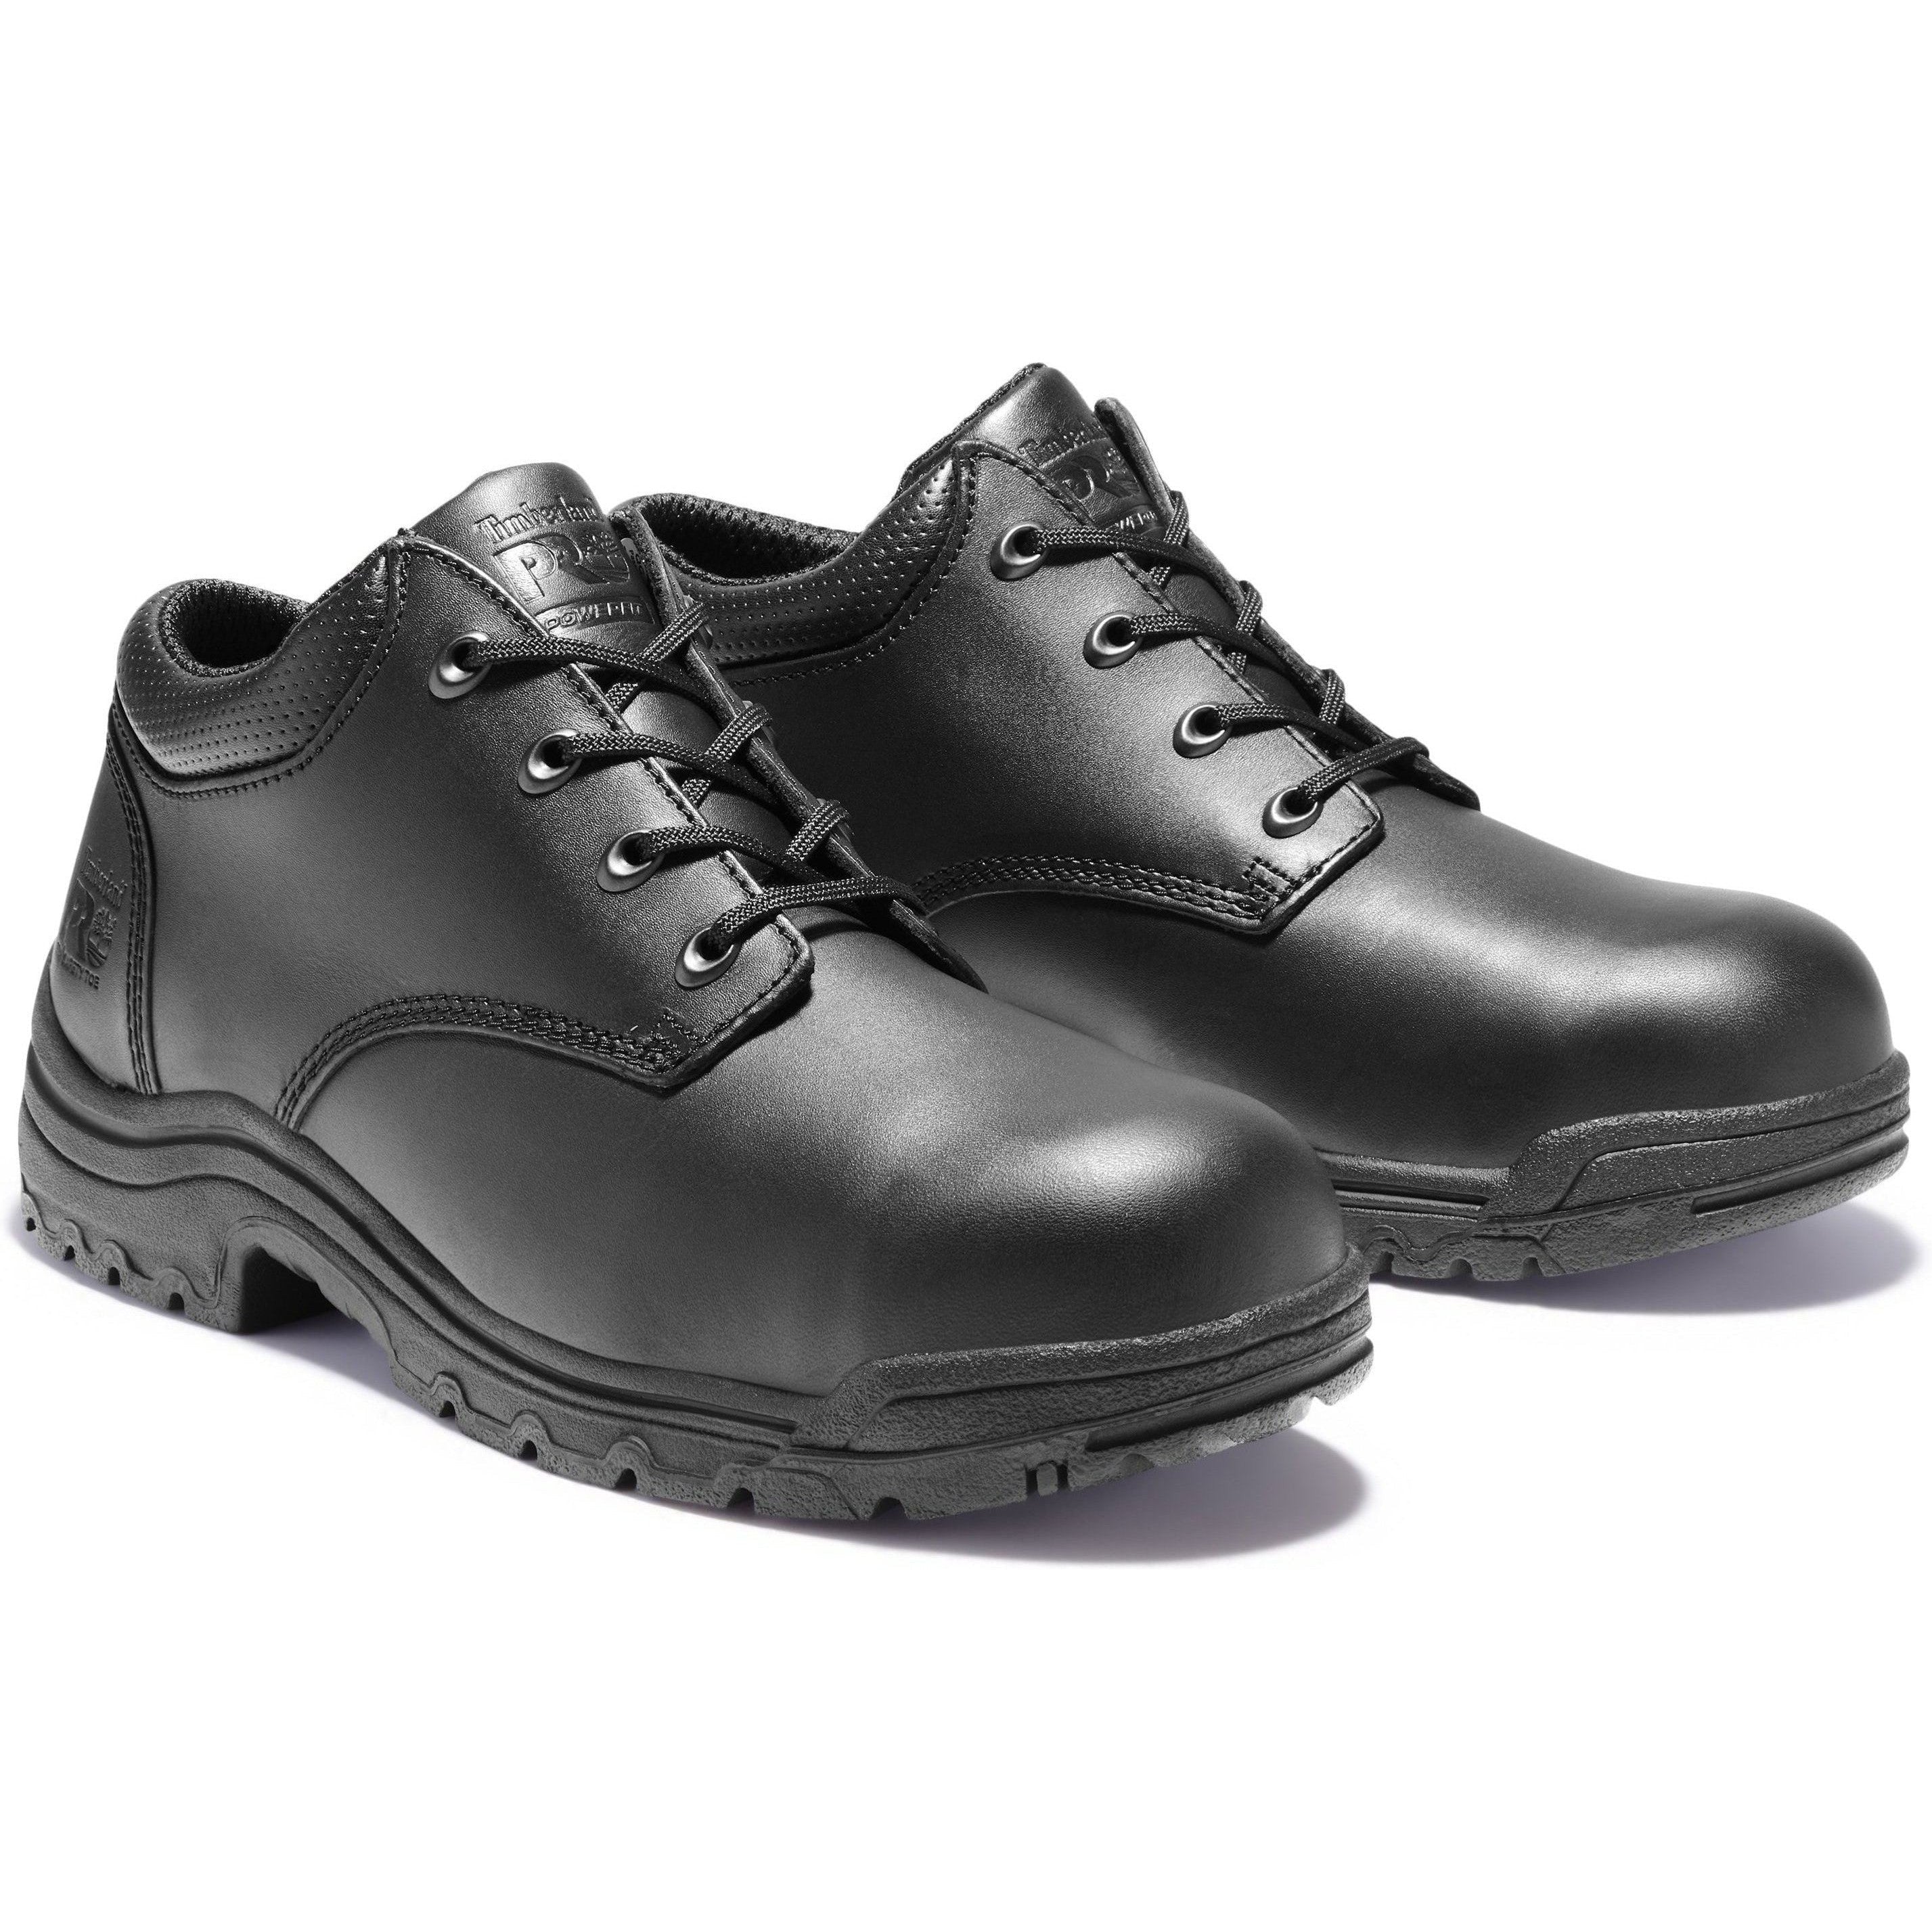 Timberland PRO Men's TiTAN Oxford Alloy Toe Work Shoe Black TB140044001 7 / Medium / Black - Overlook Boots